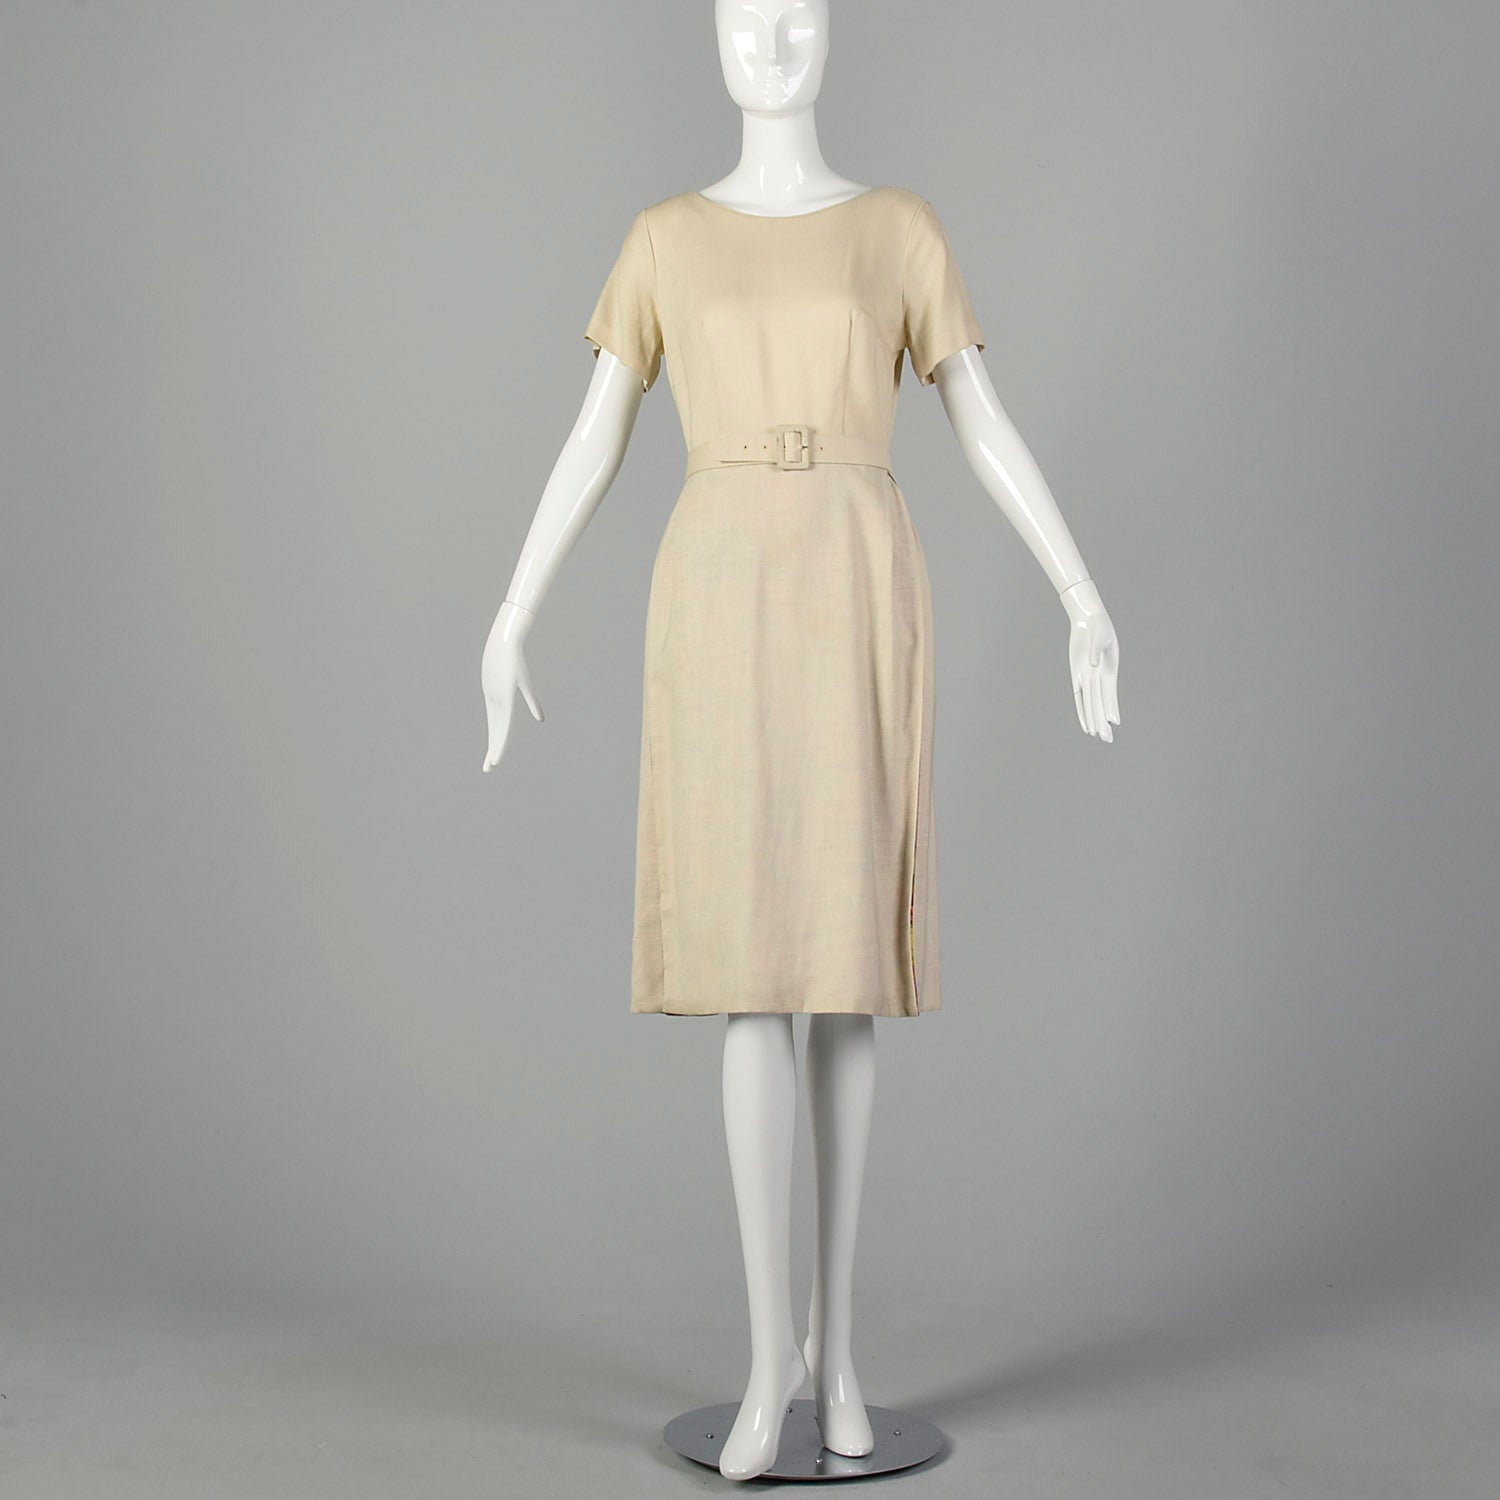 Medium 1960s Tan Cotton Dress